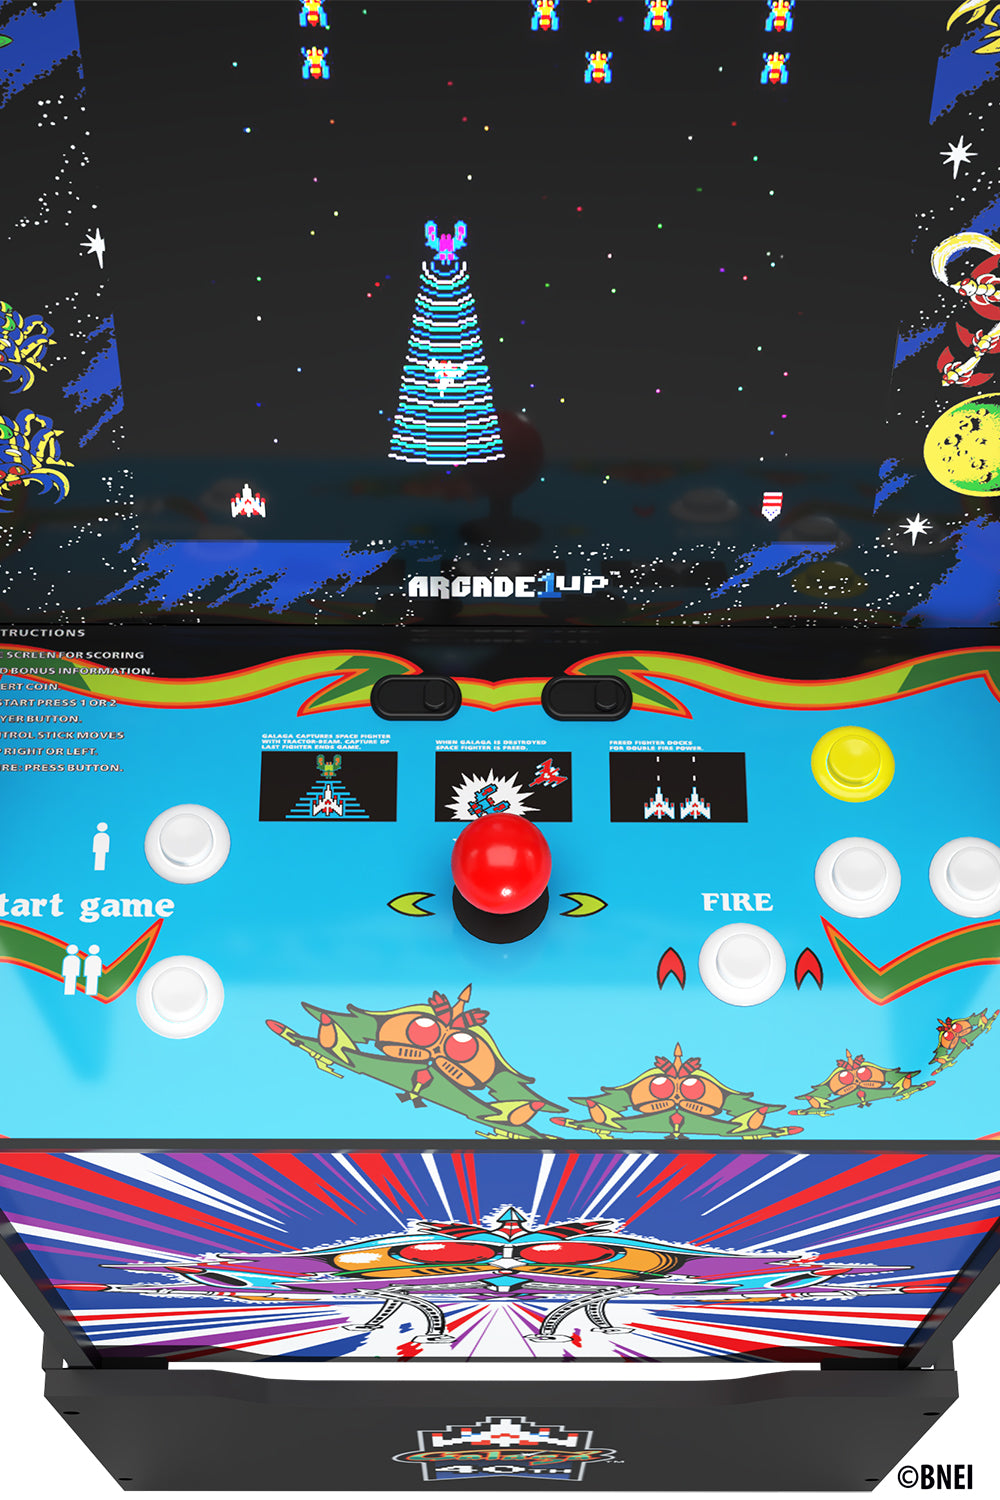 Galaga Arcade Game 40th Anniversary Edition